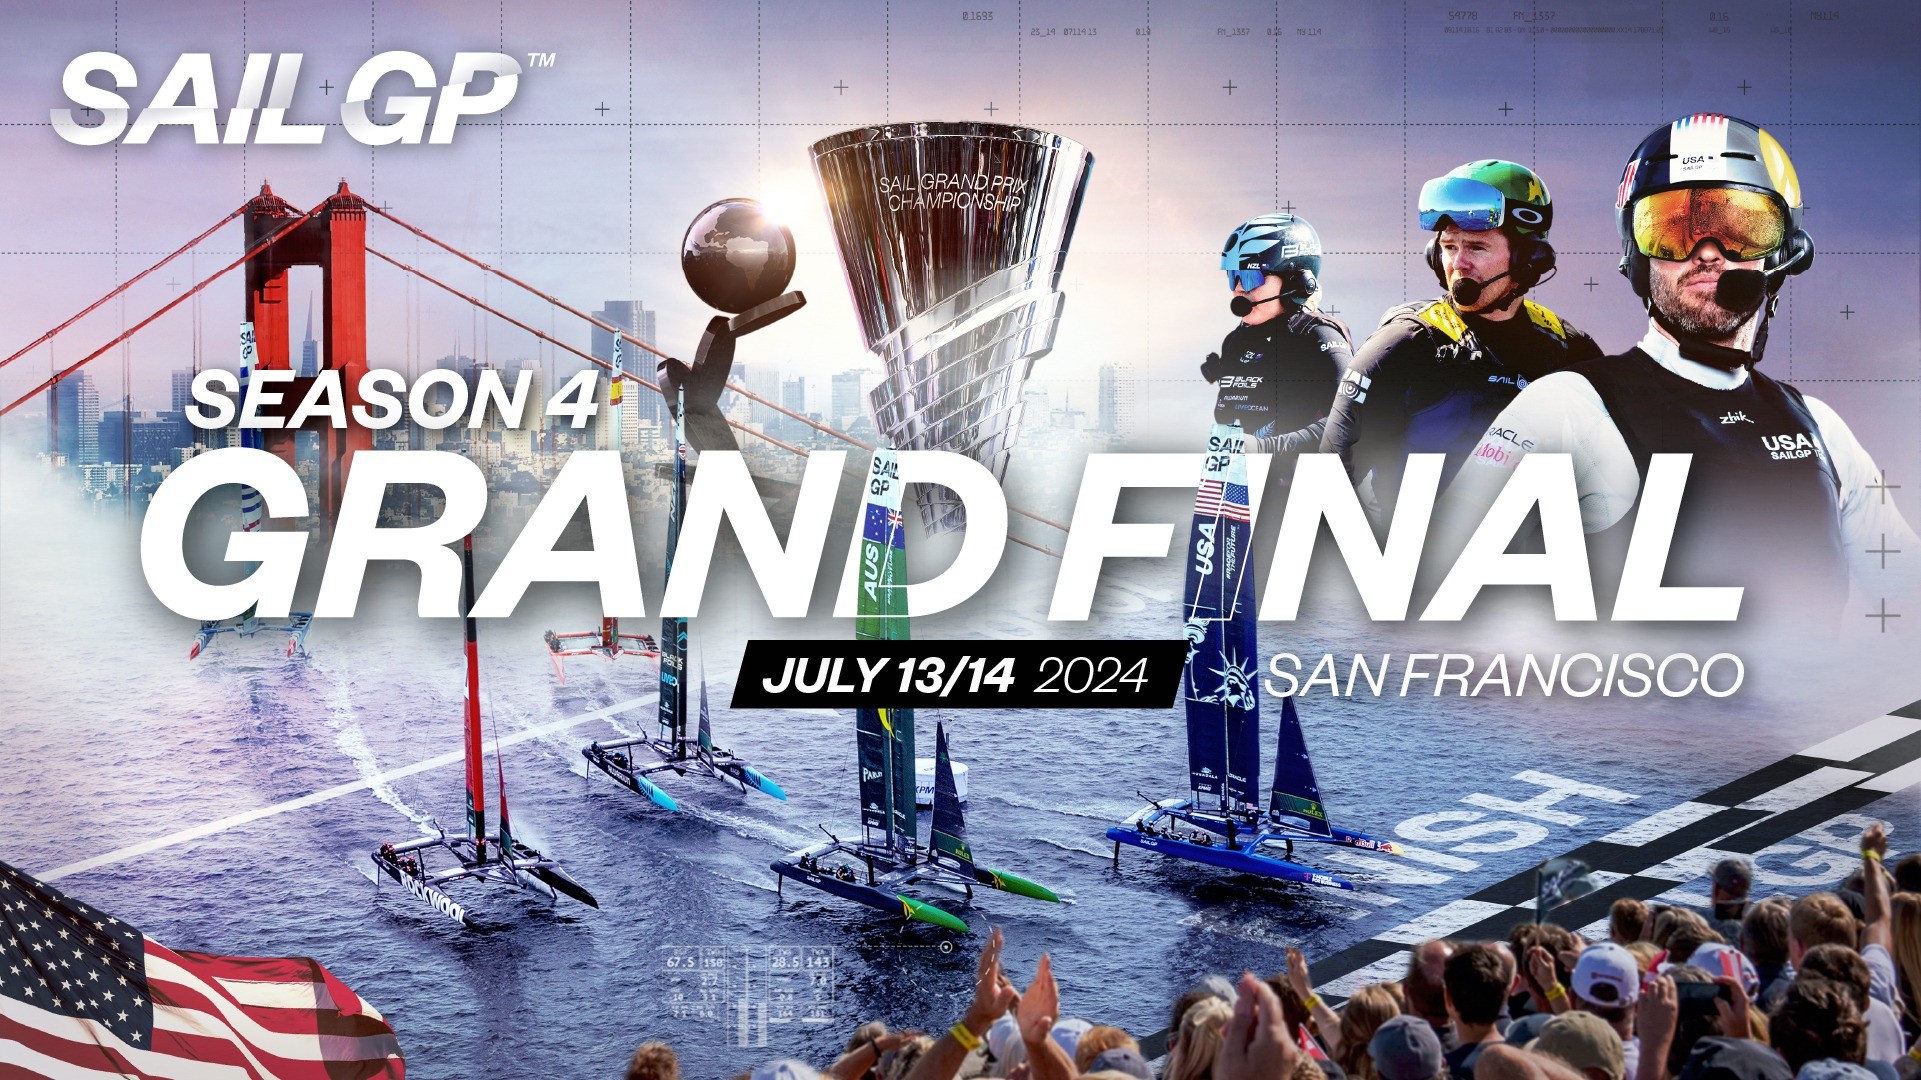 SailGP returns to San Francisco for Season 4 Grand Final showdown